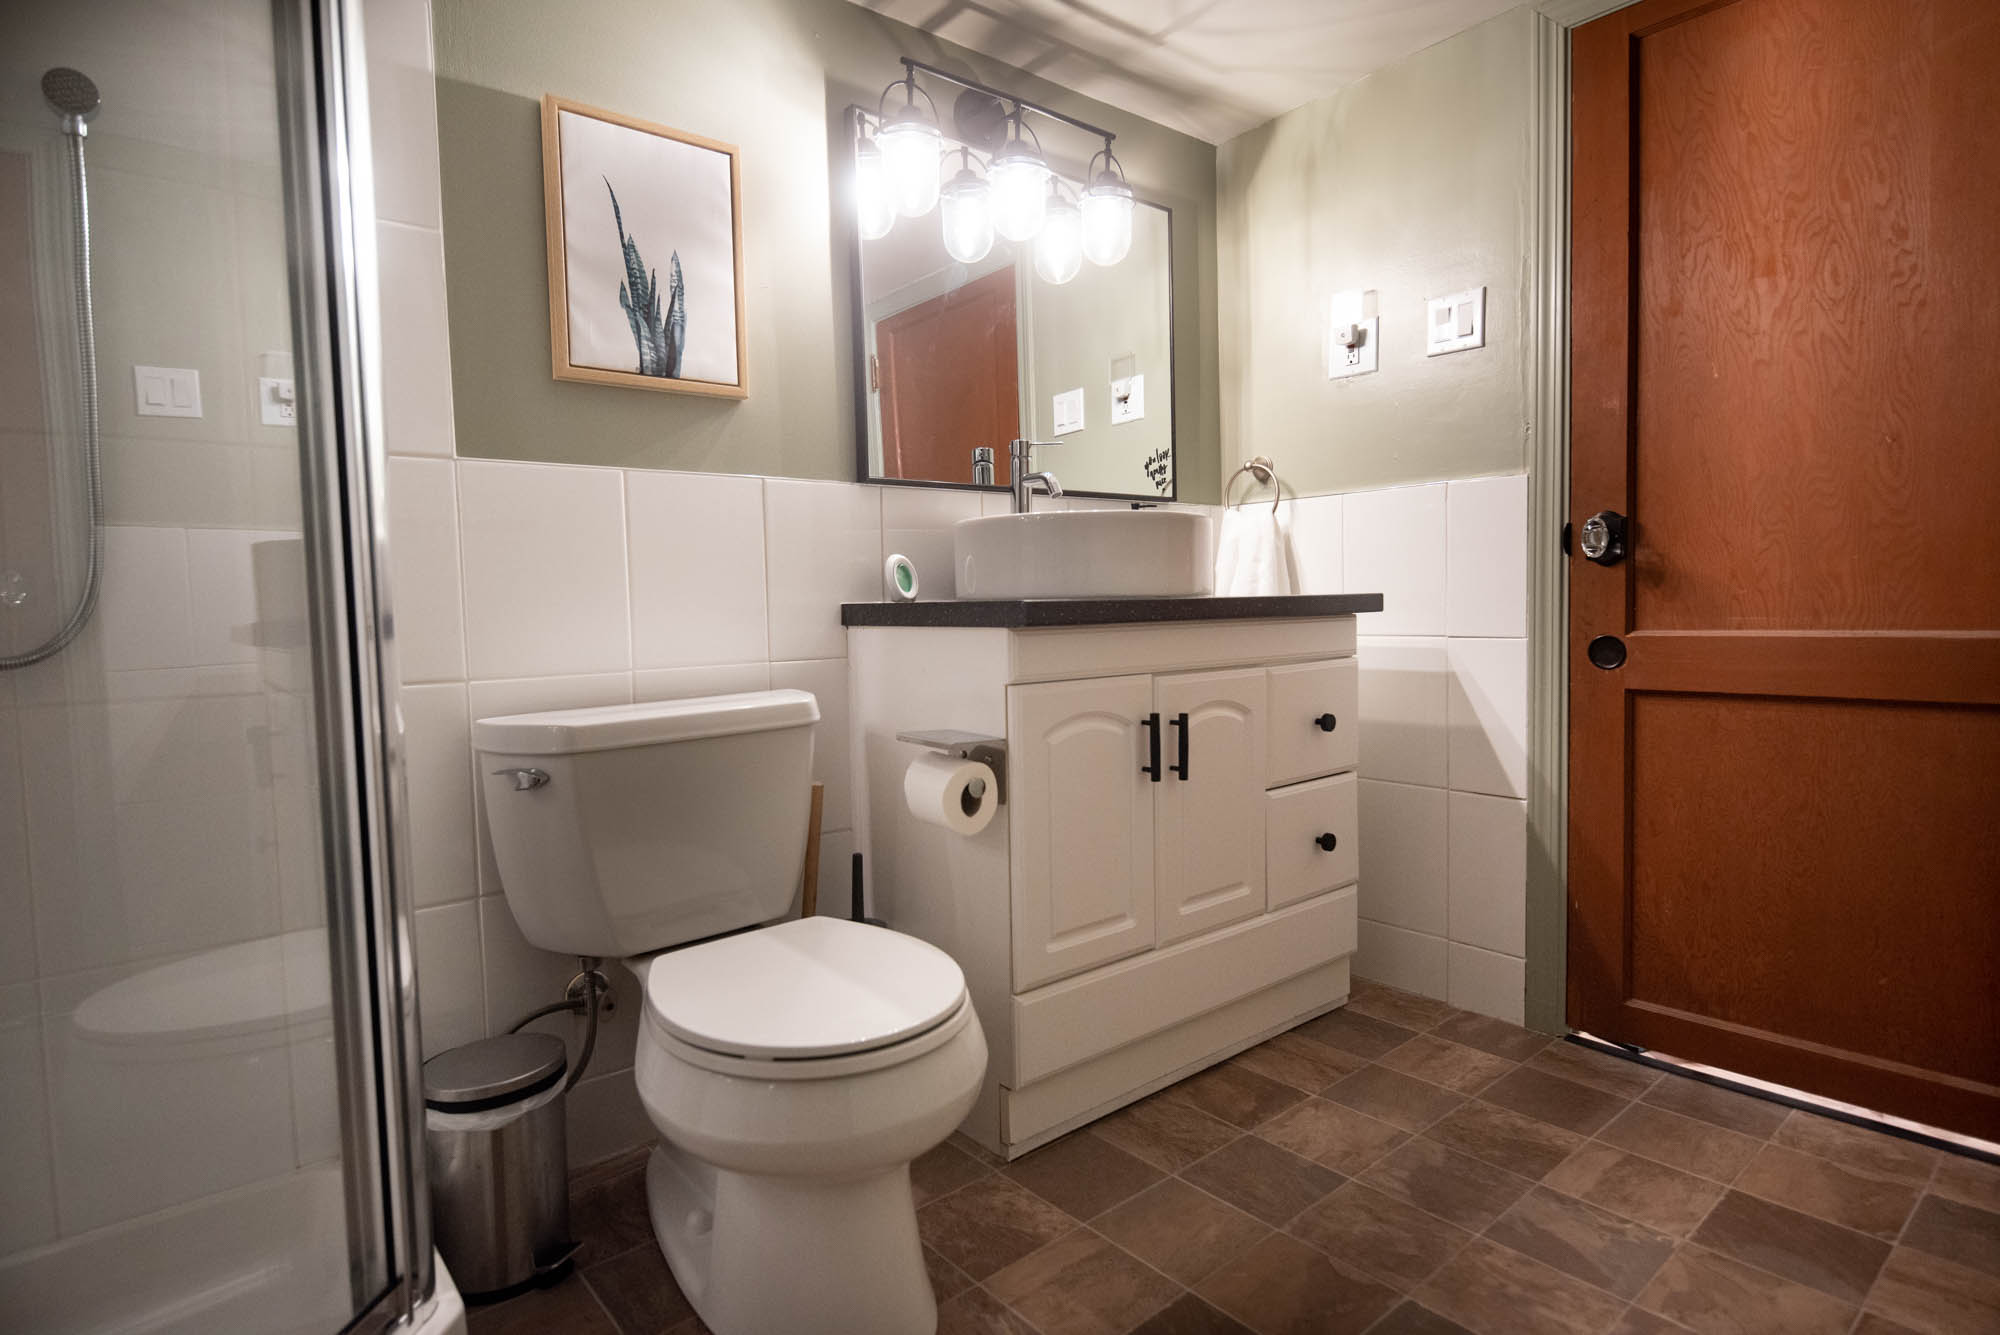 Cozy basement bathroom for an airbnb